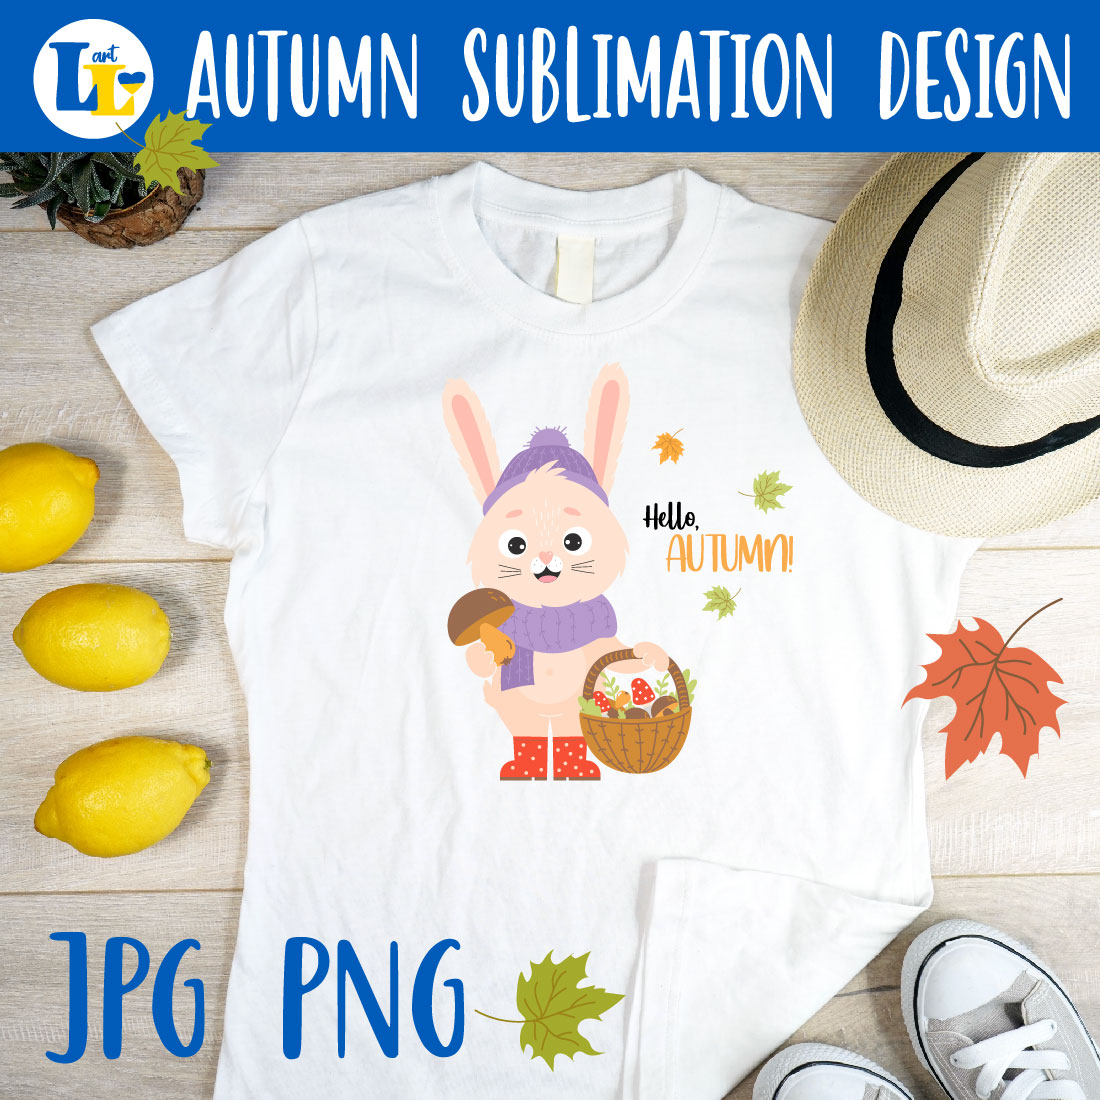 Rabbit Mushroomer Autumn Sublimation Design cover image.